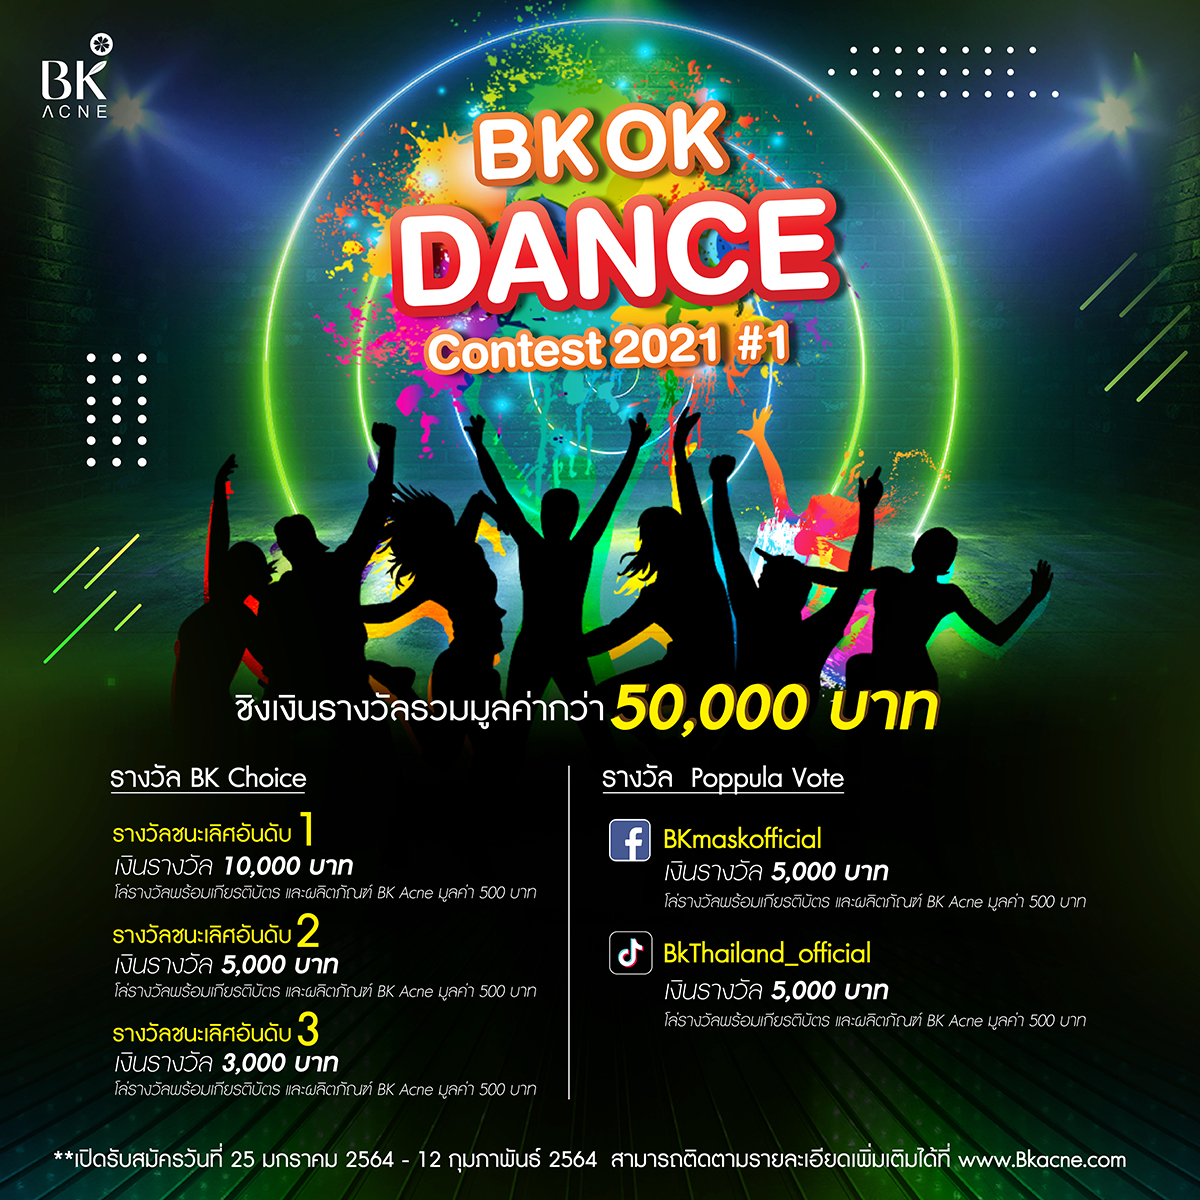 BK OK Dance Contest 2021 #1